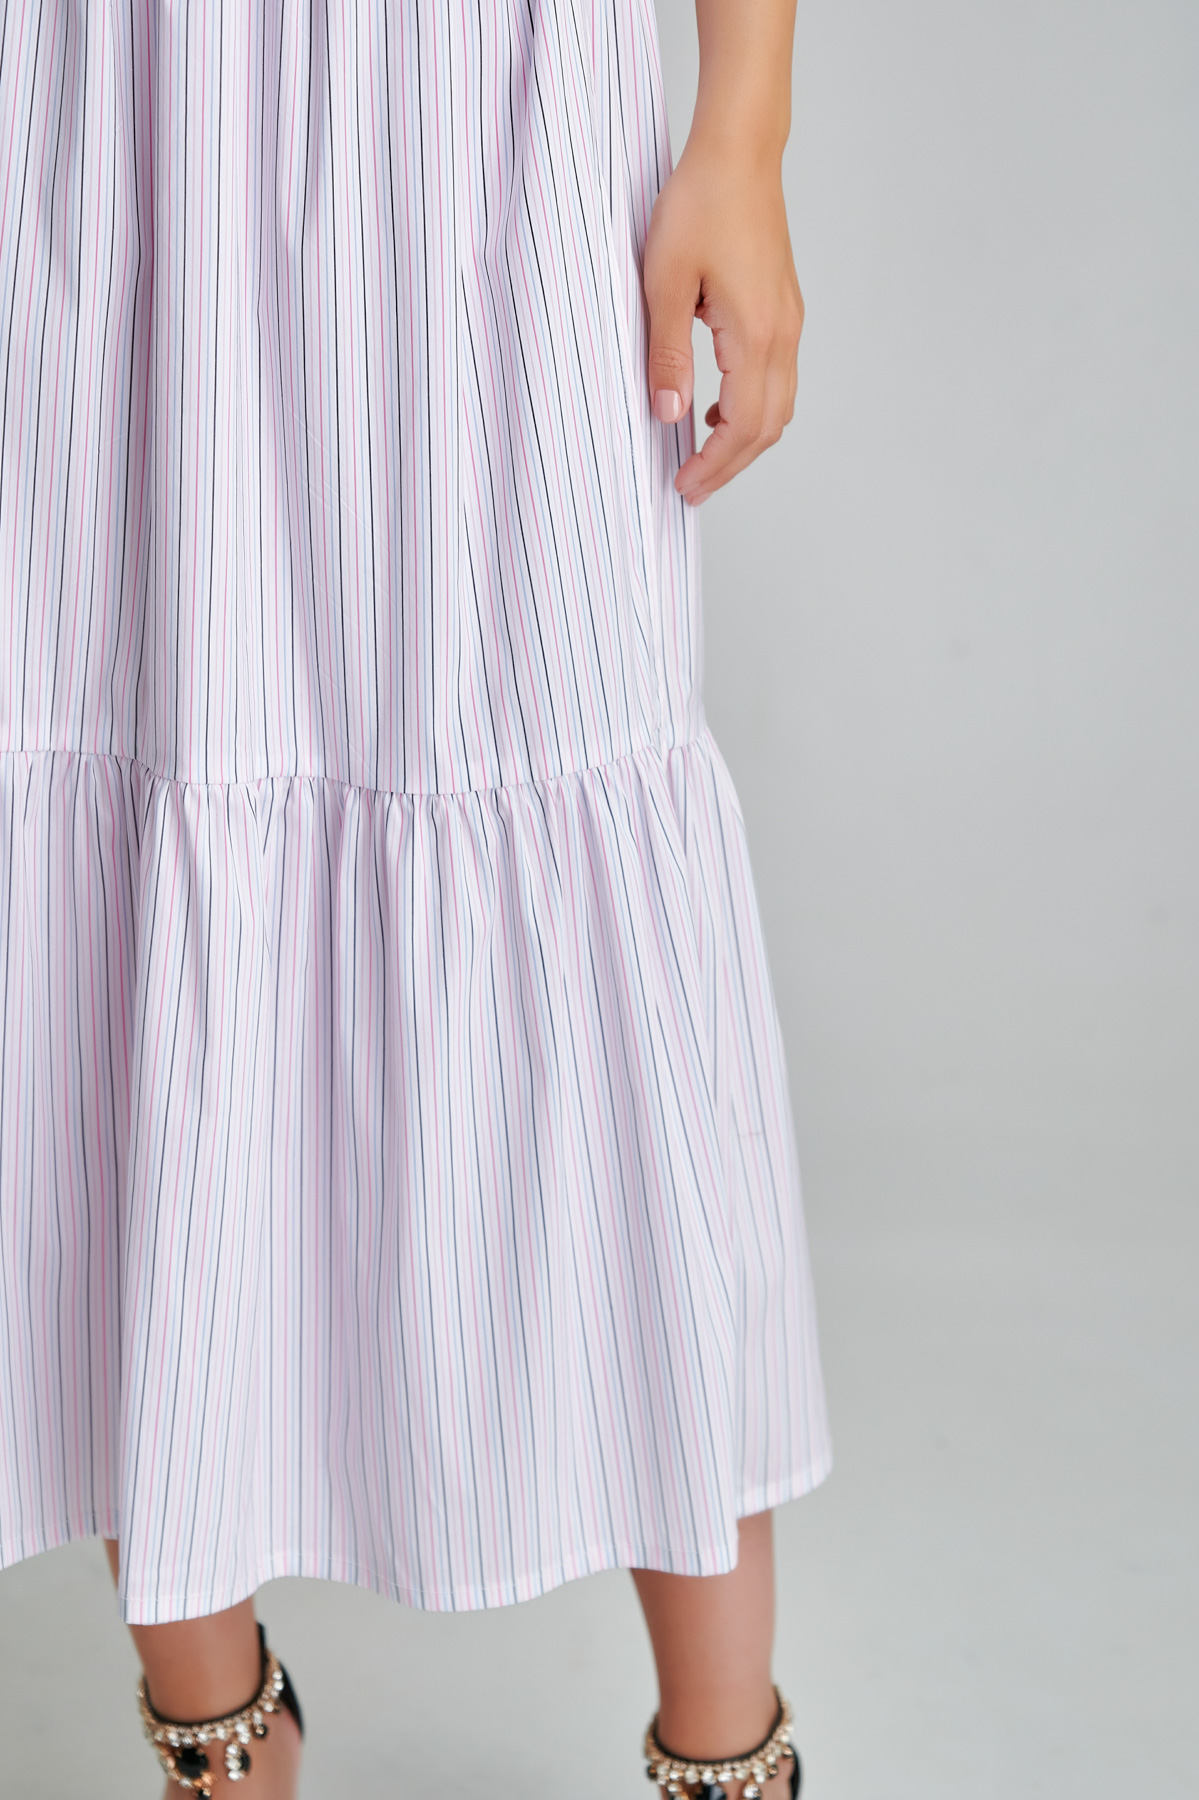 VERITA casual striped poplin day dress. Natural fabrics, original design, handmade embroidery